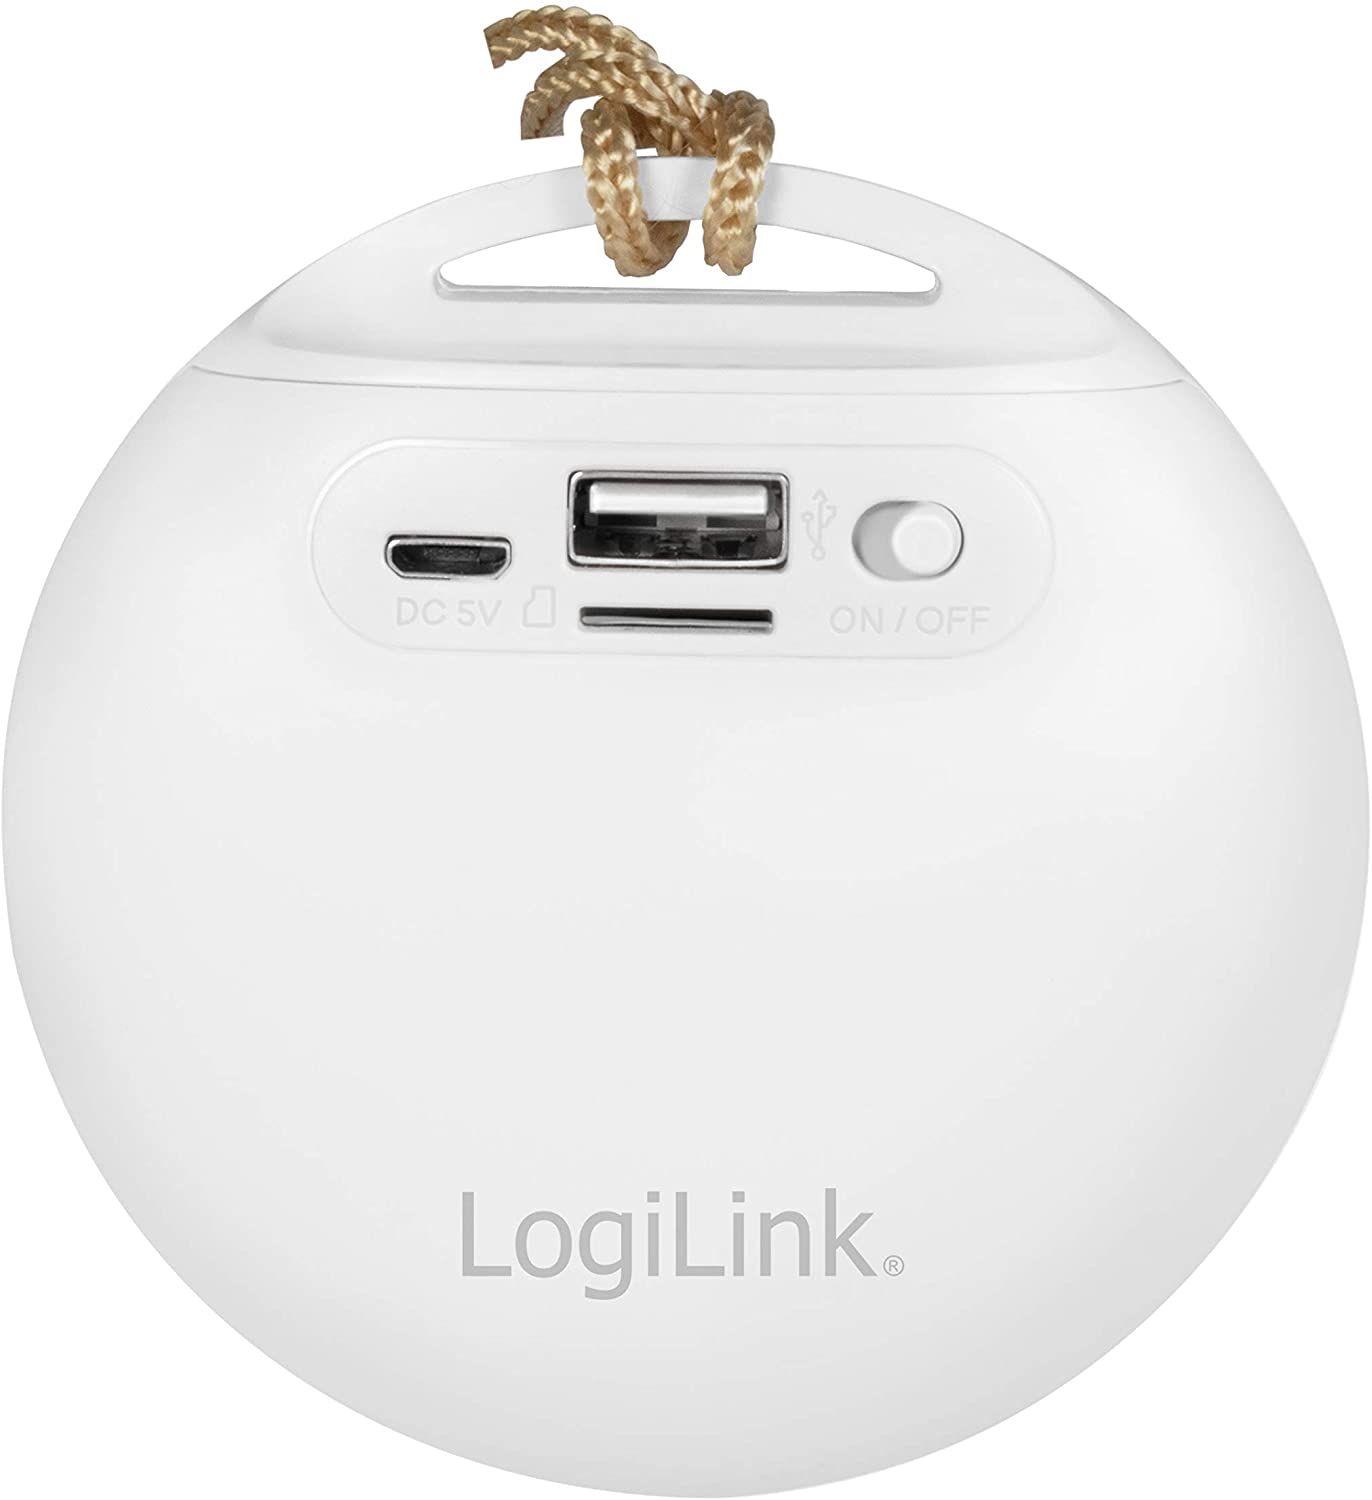 Speaker Portable Bluetooth LogiLink con porta USB, M. SD e Radio